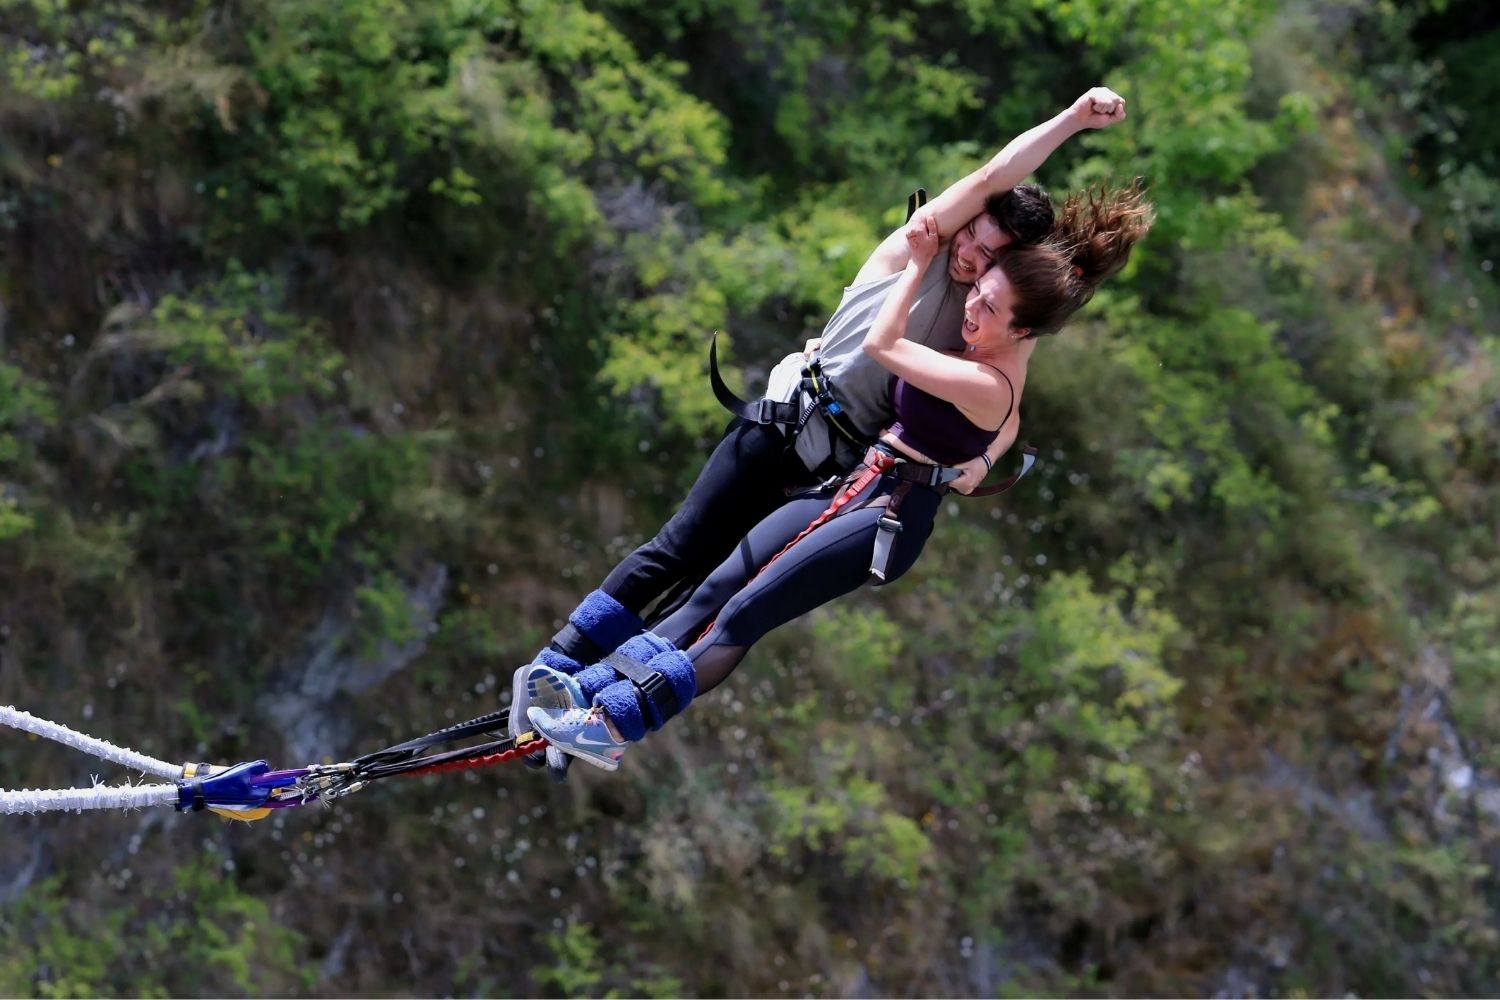 Top 10 Bungee Jumping Destinations in India - Rishikesh, Goa - KreedOn